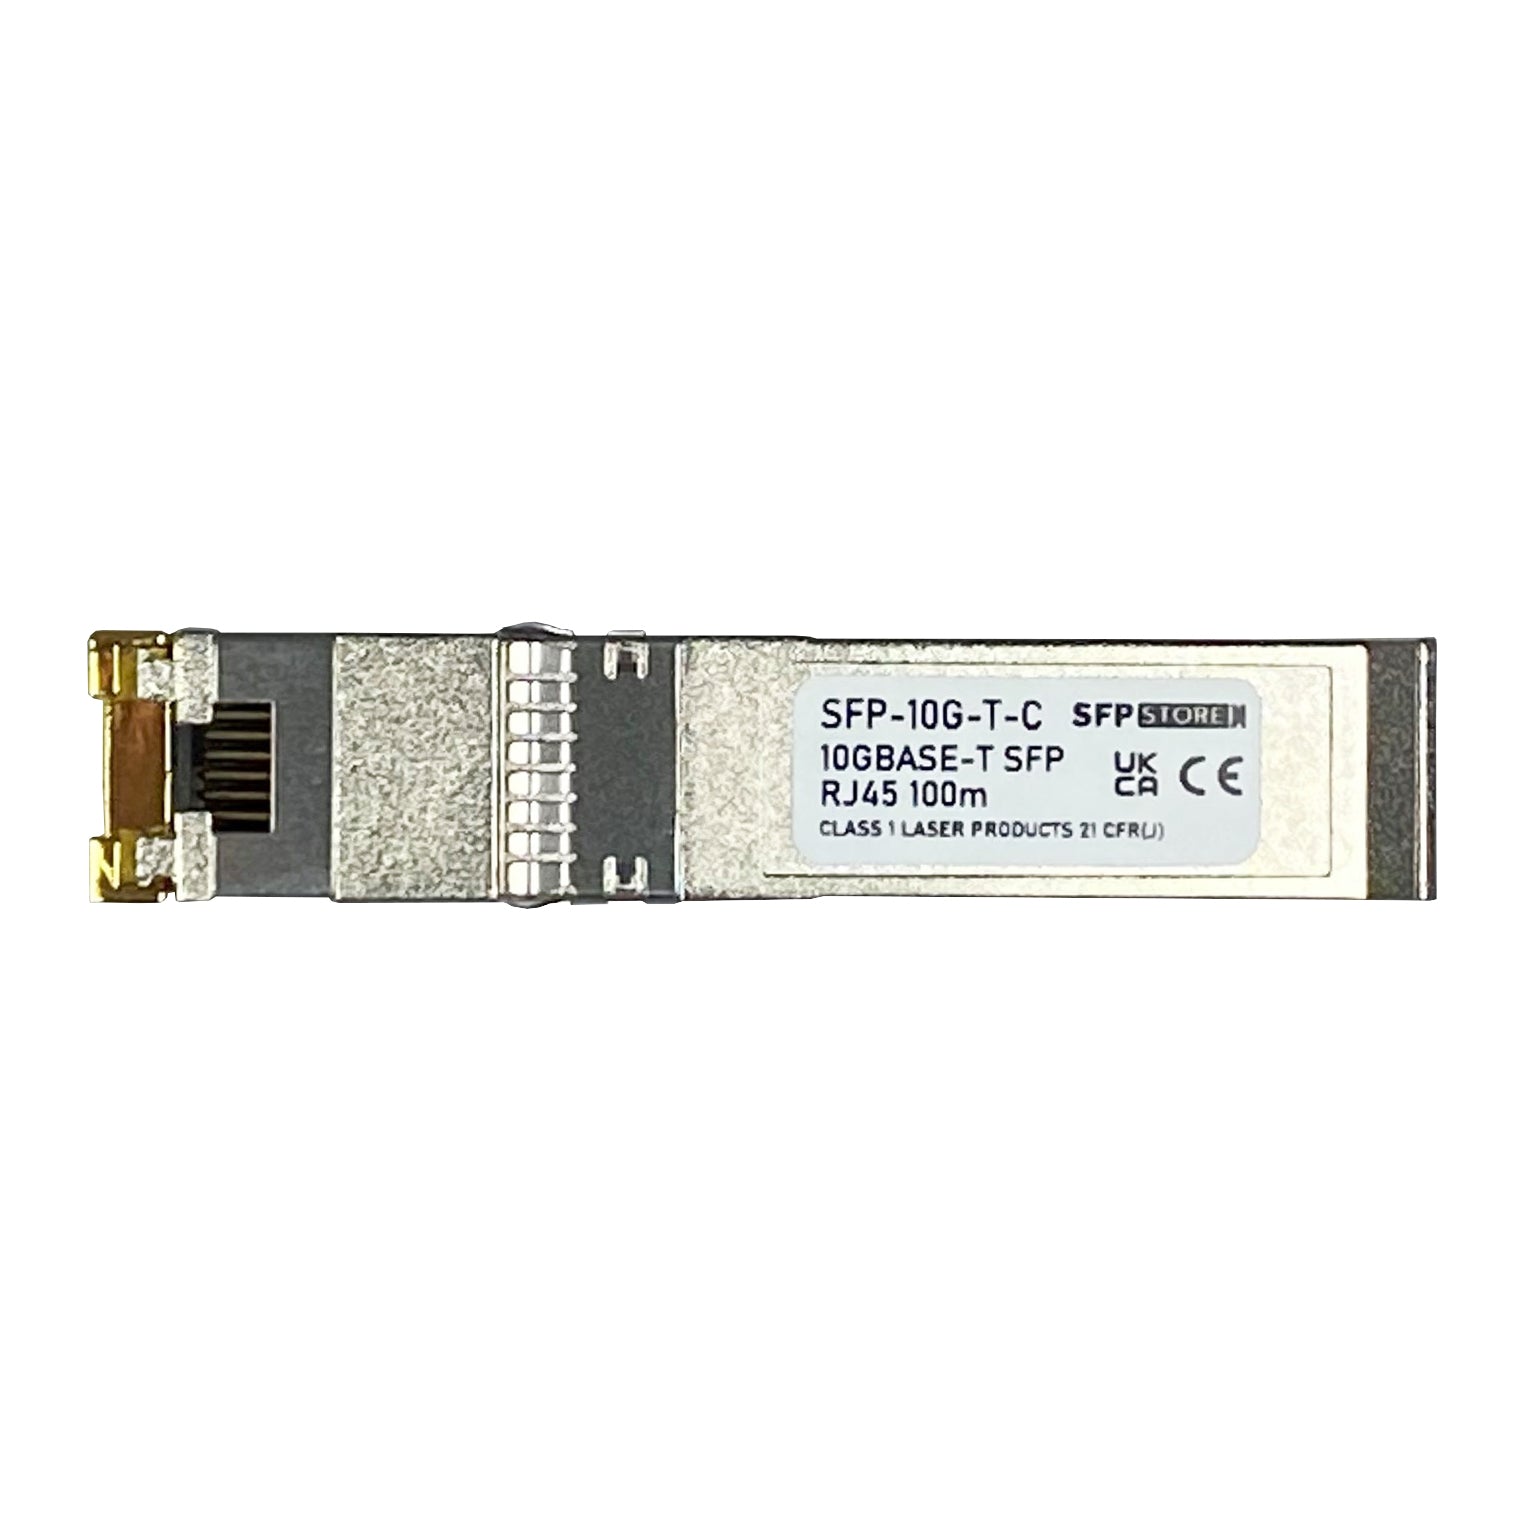 7G17A03130-C IBM Compatible 10G SFP+ RJ45 Copper Transceiver